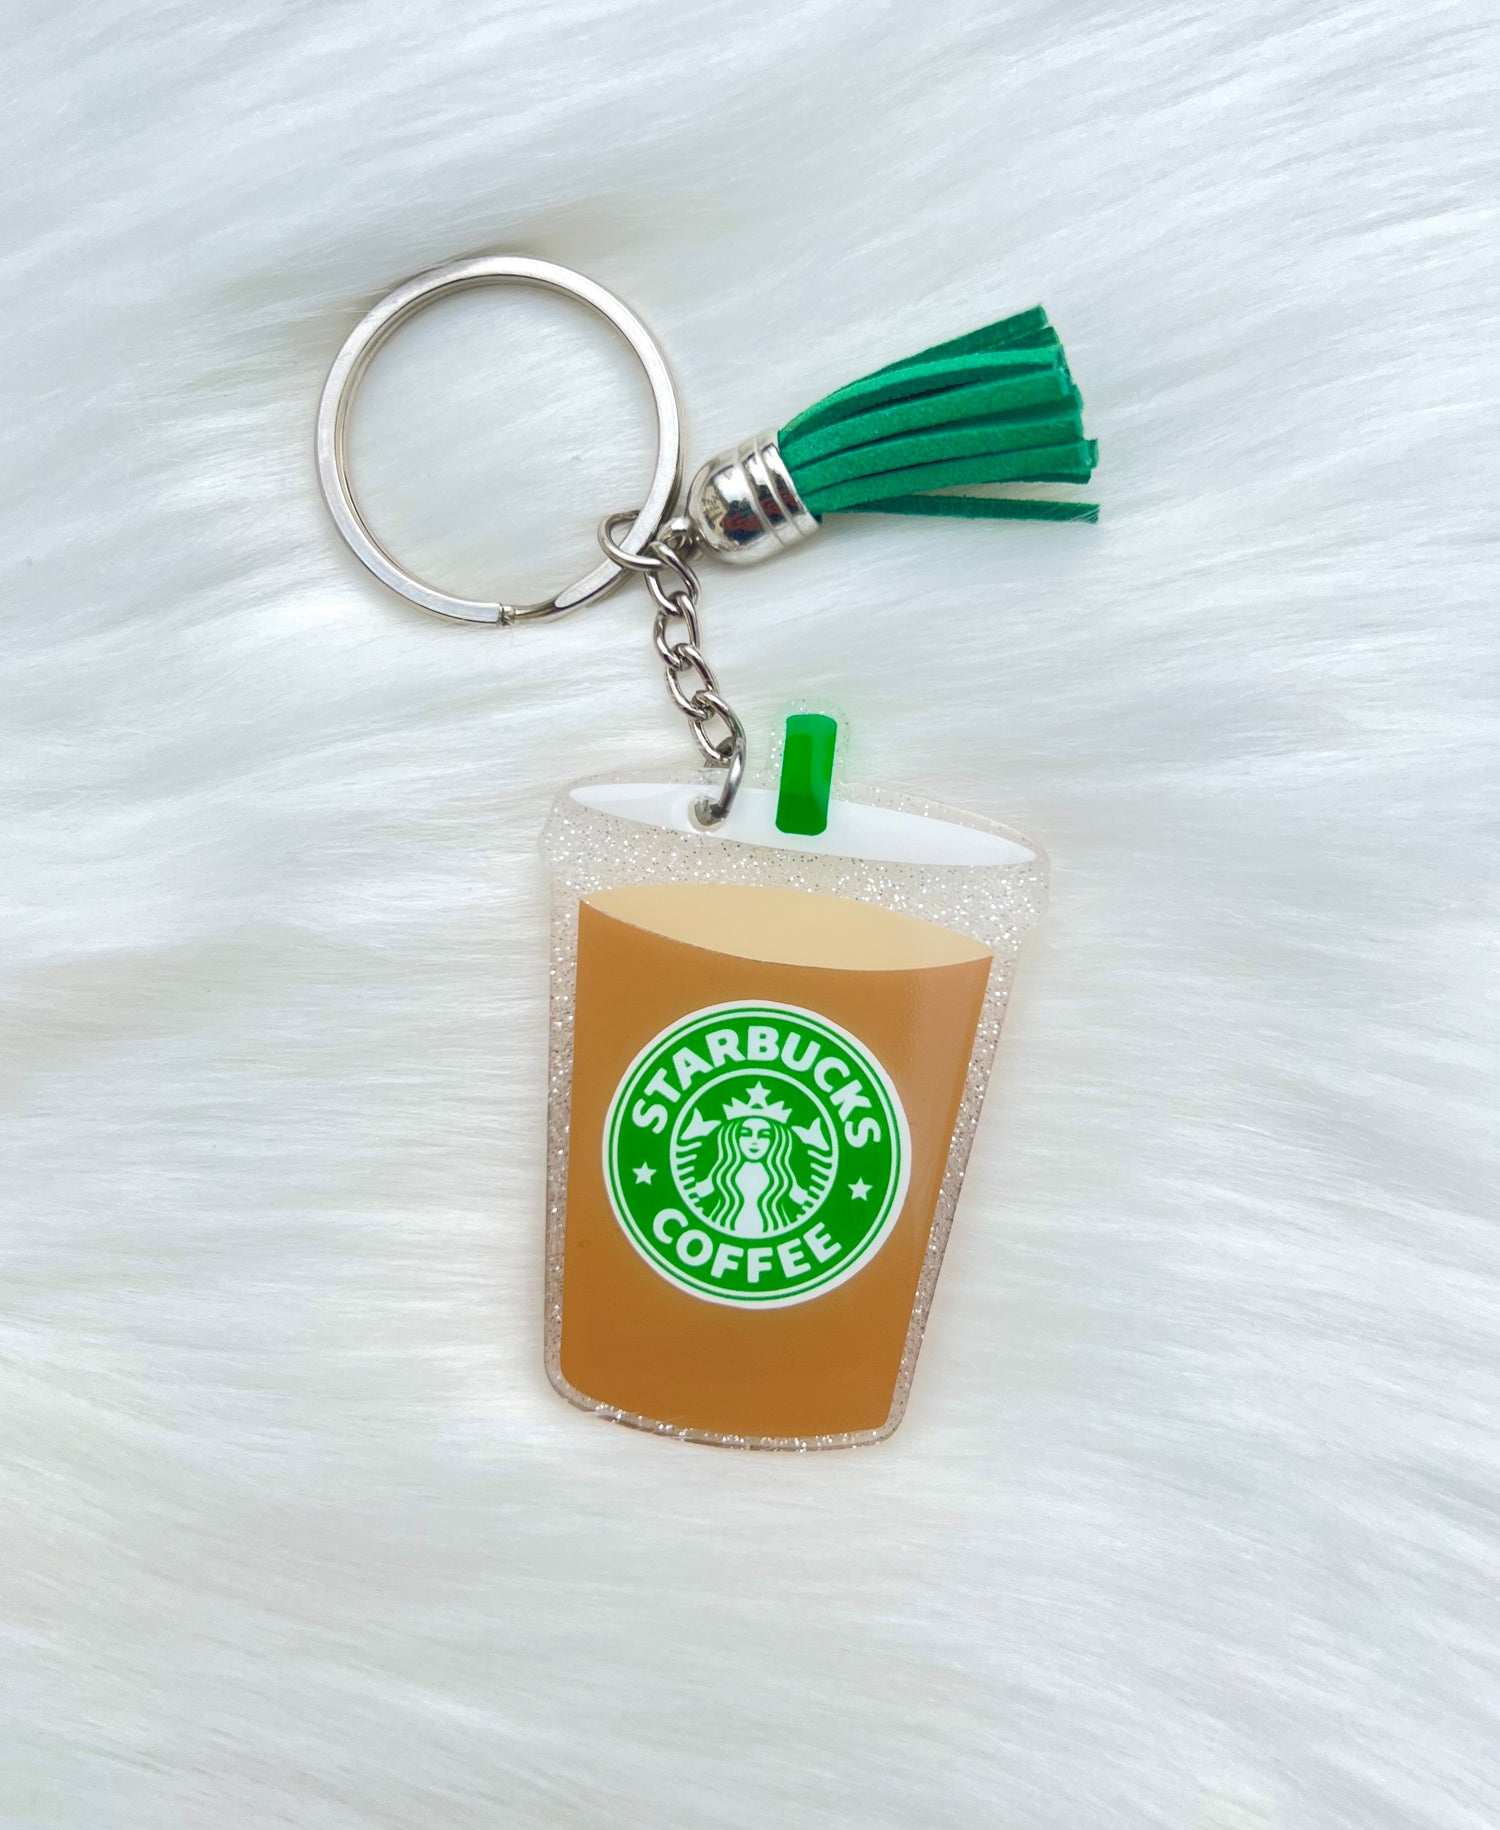 Starbucks Iced Coffee Keychain - 2.5 Inch - Cherry Pit Designs